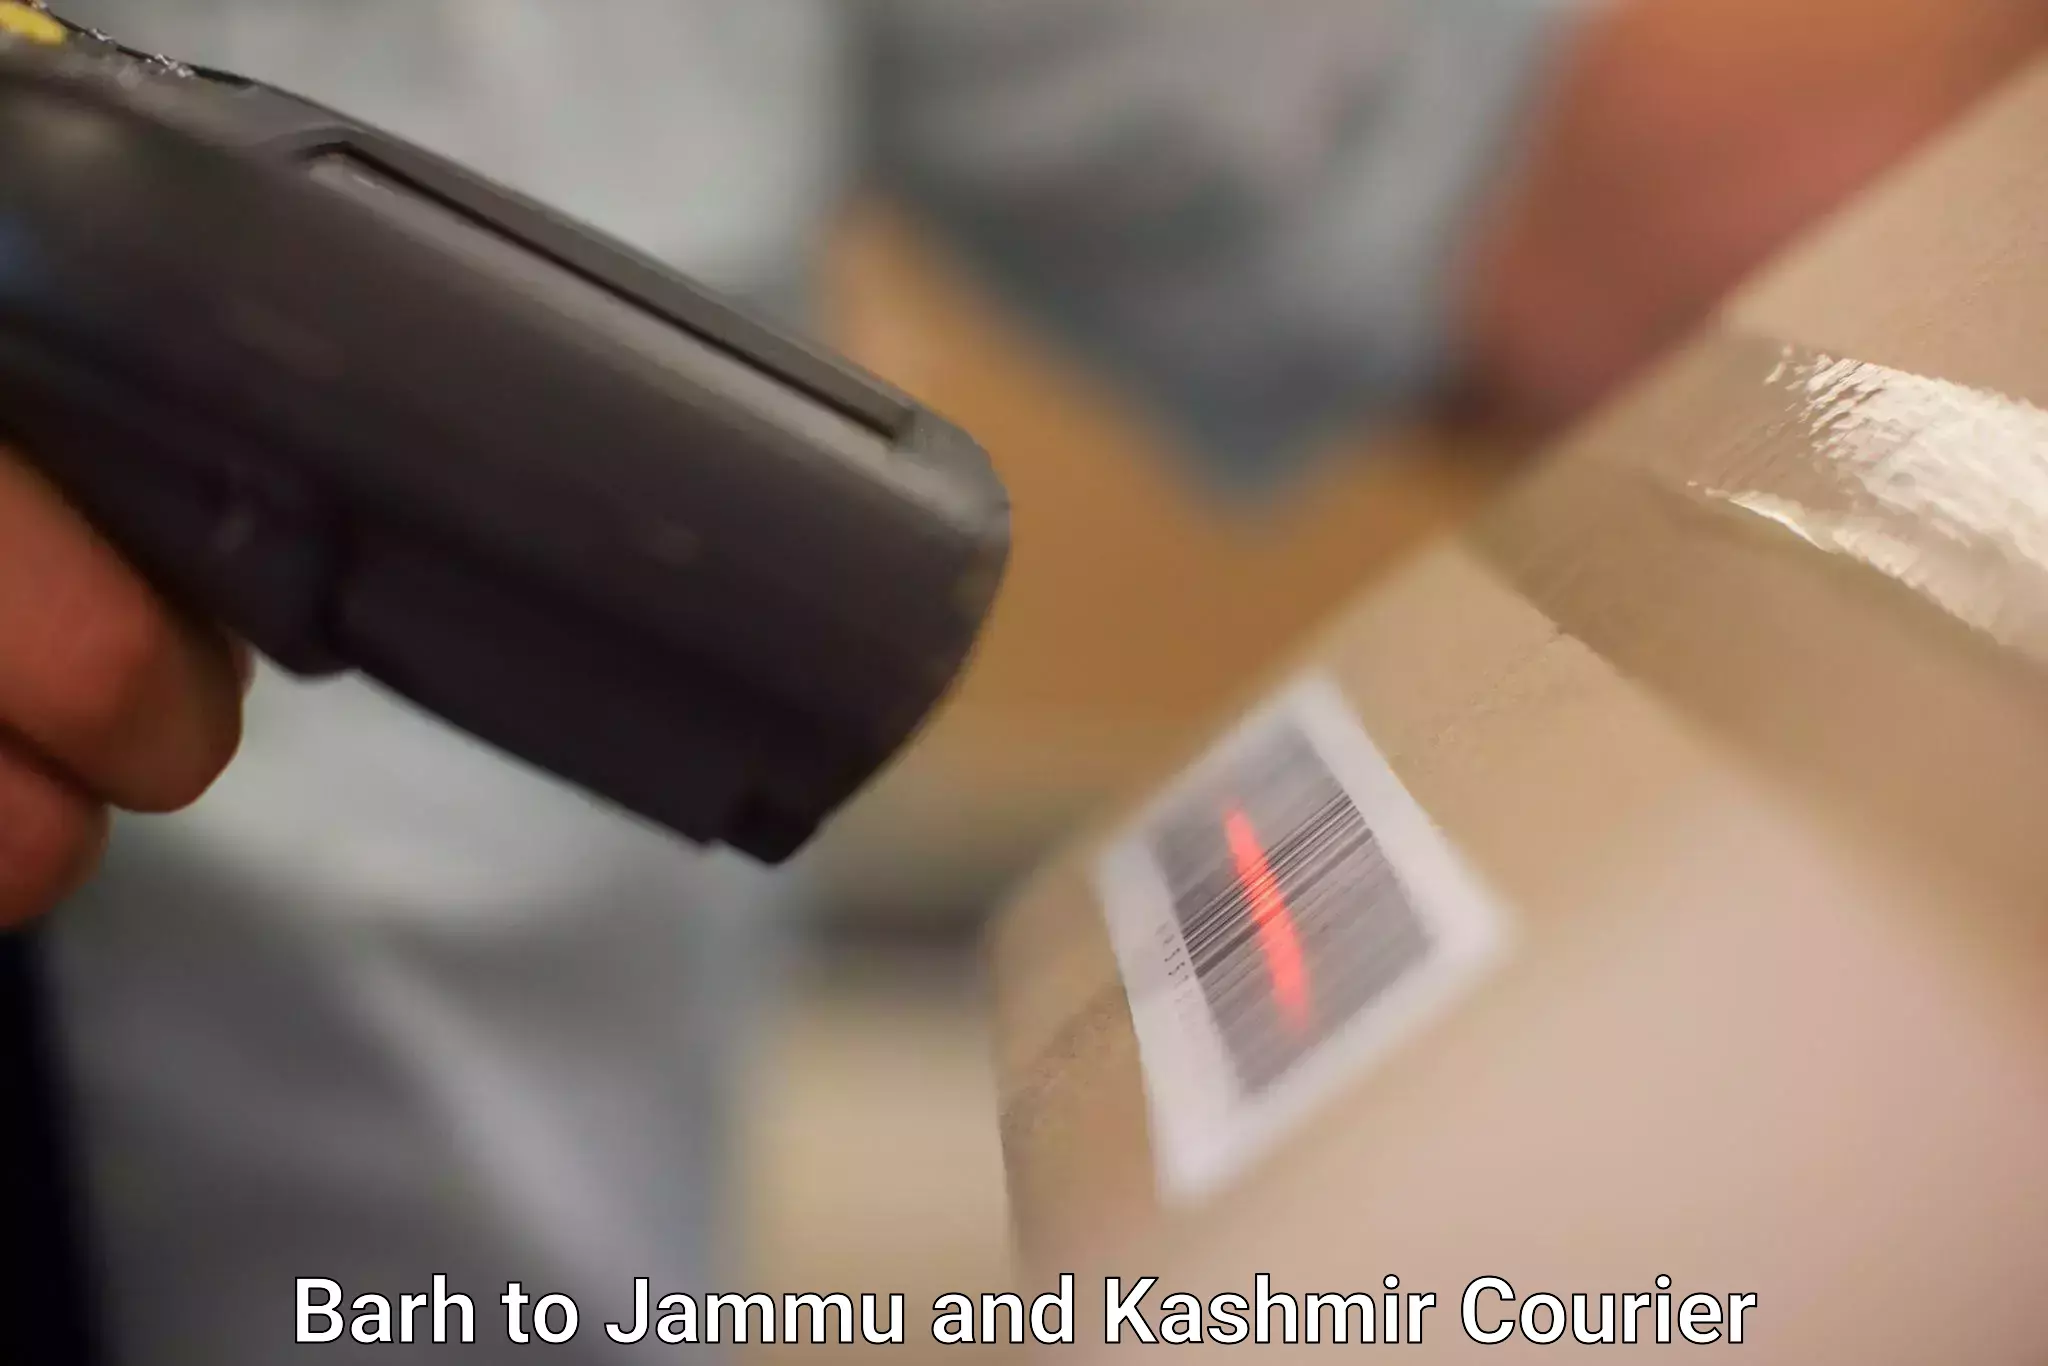 Cargo delivery service Barh to Jammu